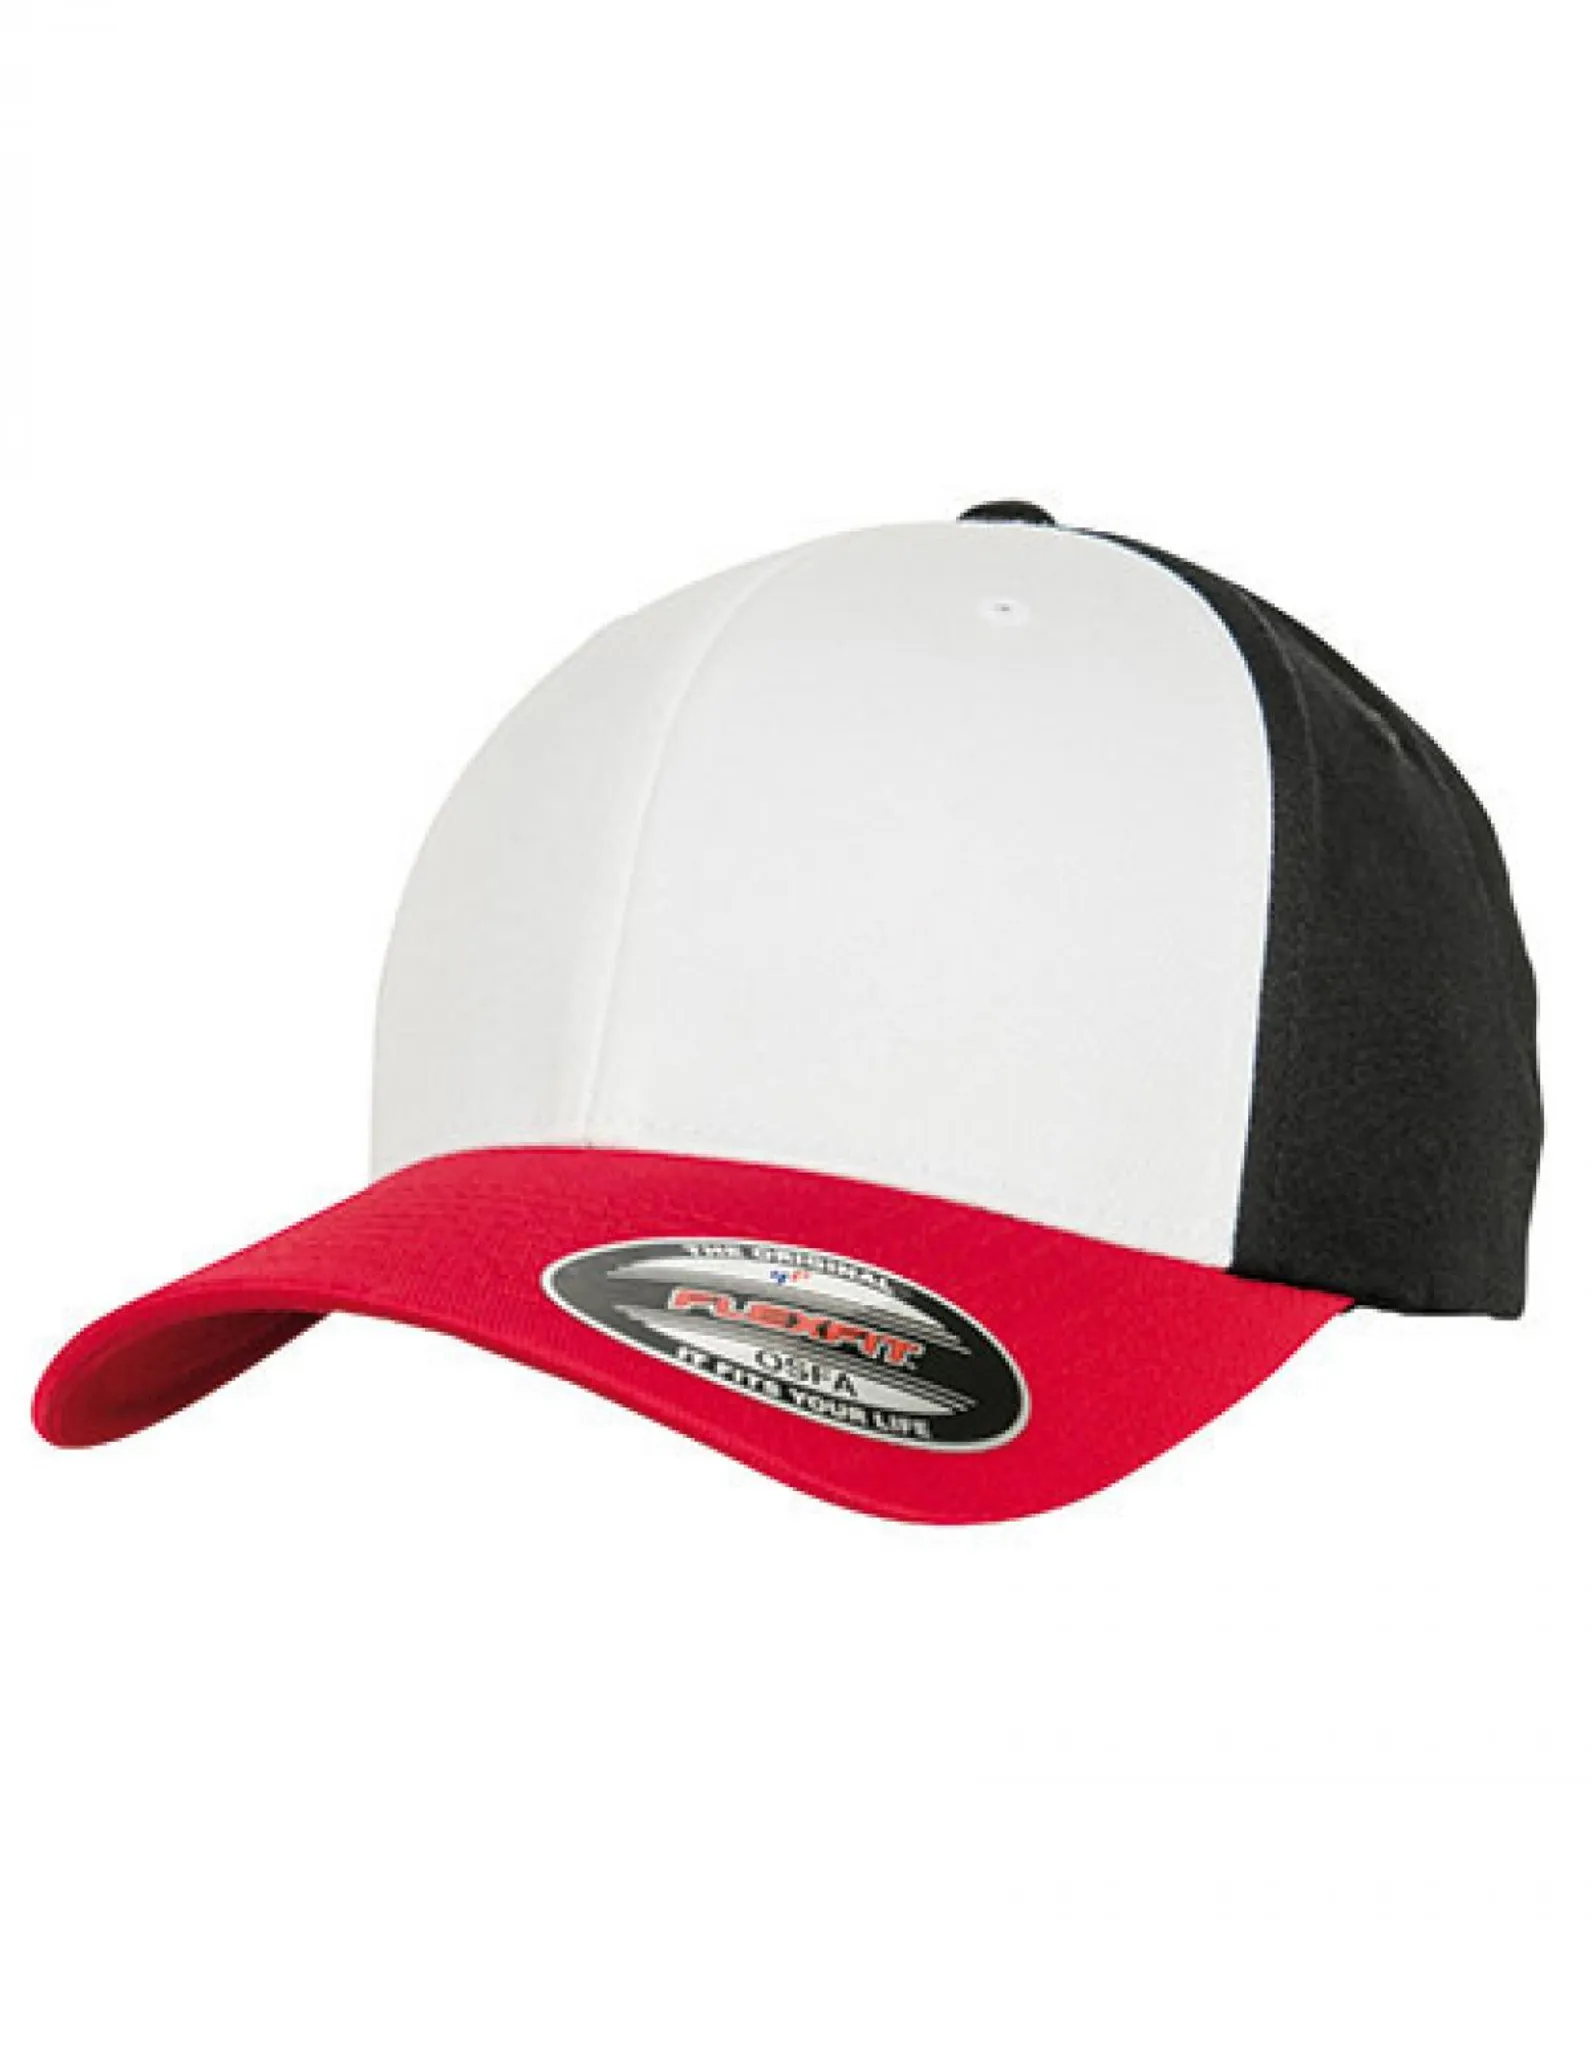 3-Tone Flexfit Cap - Red/White/Black Farbe